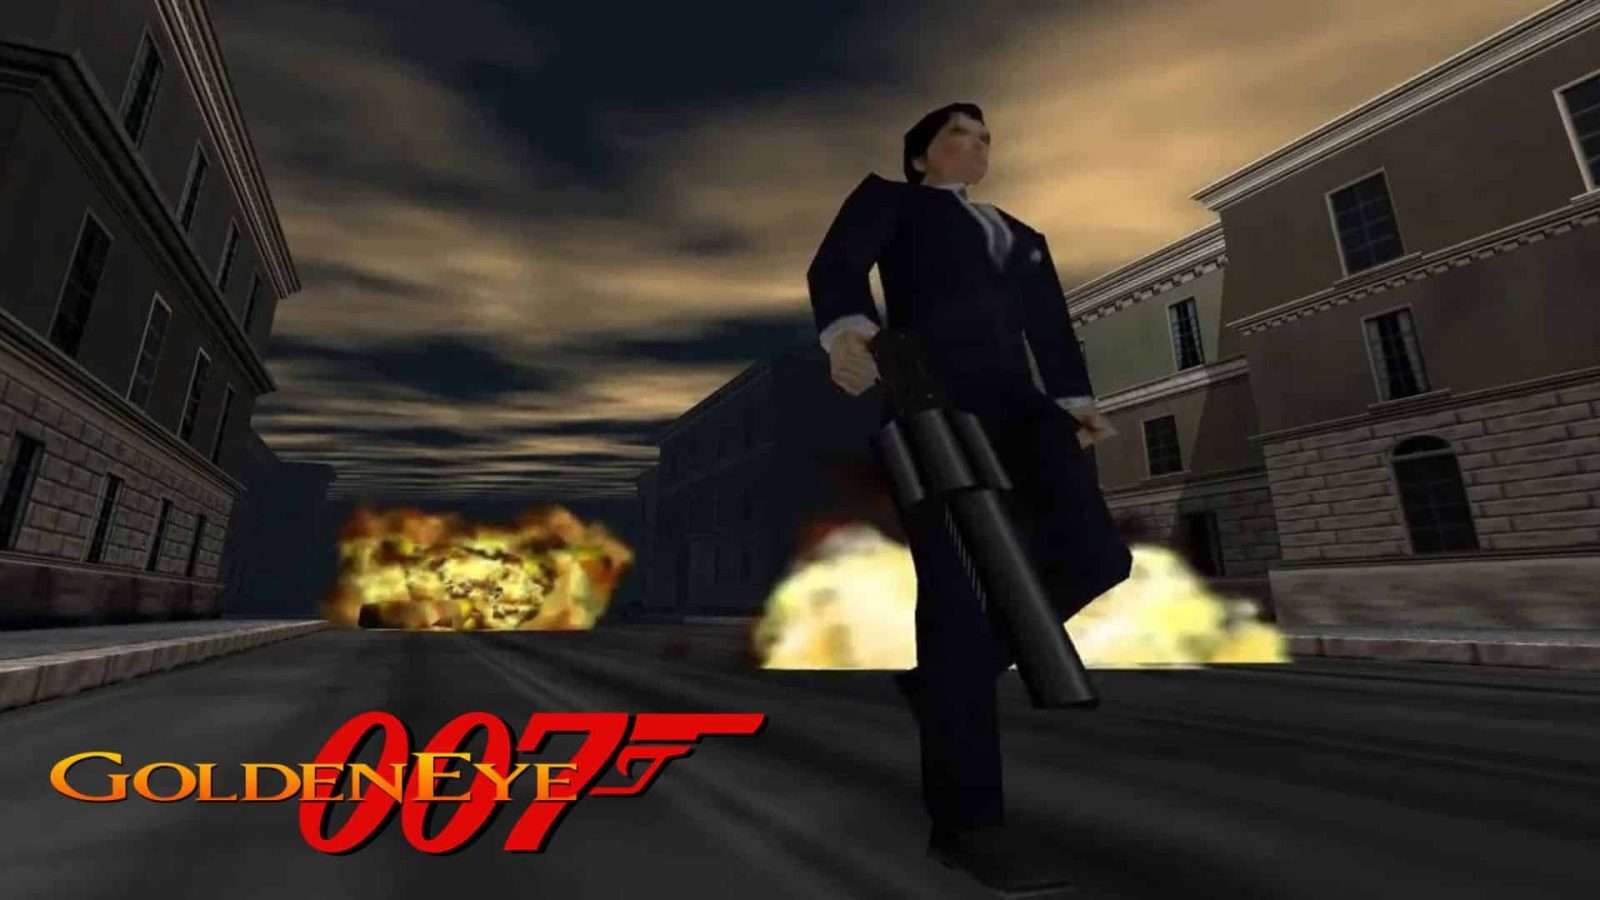 james bond running from explosion in goldeneye 007